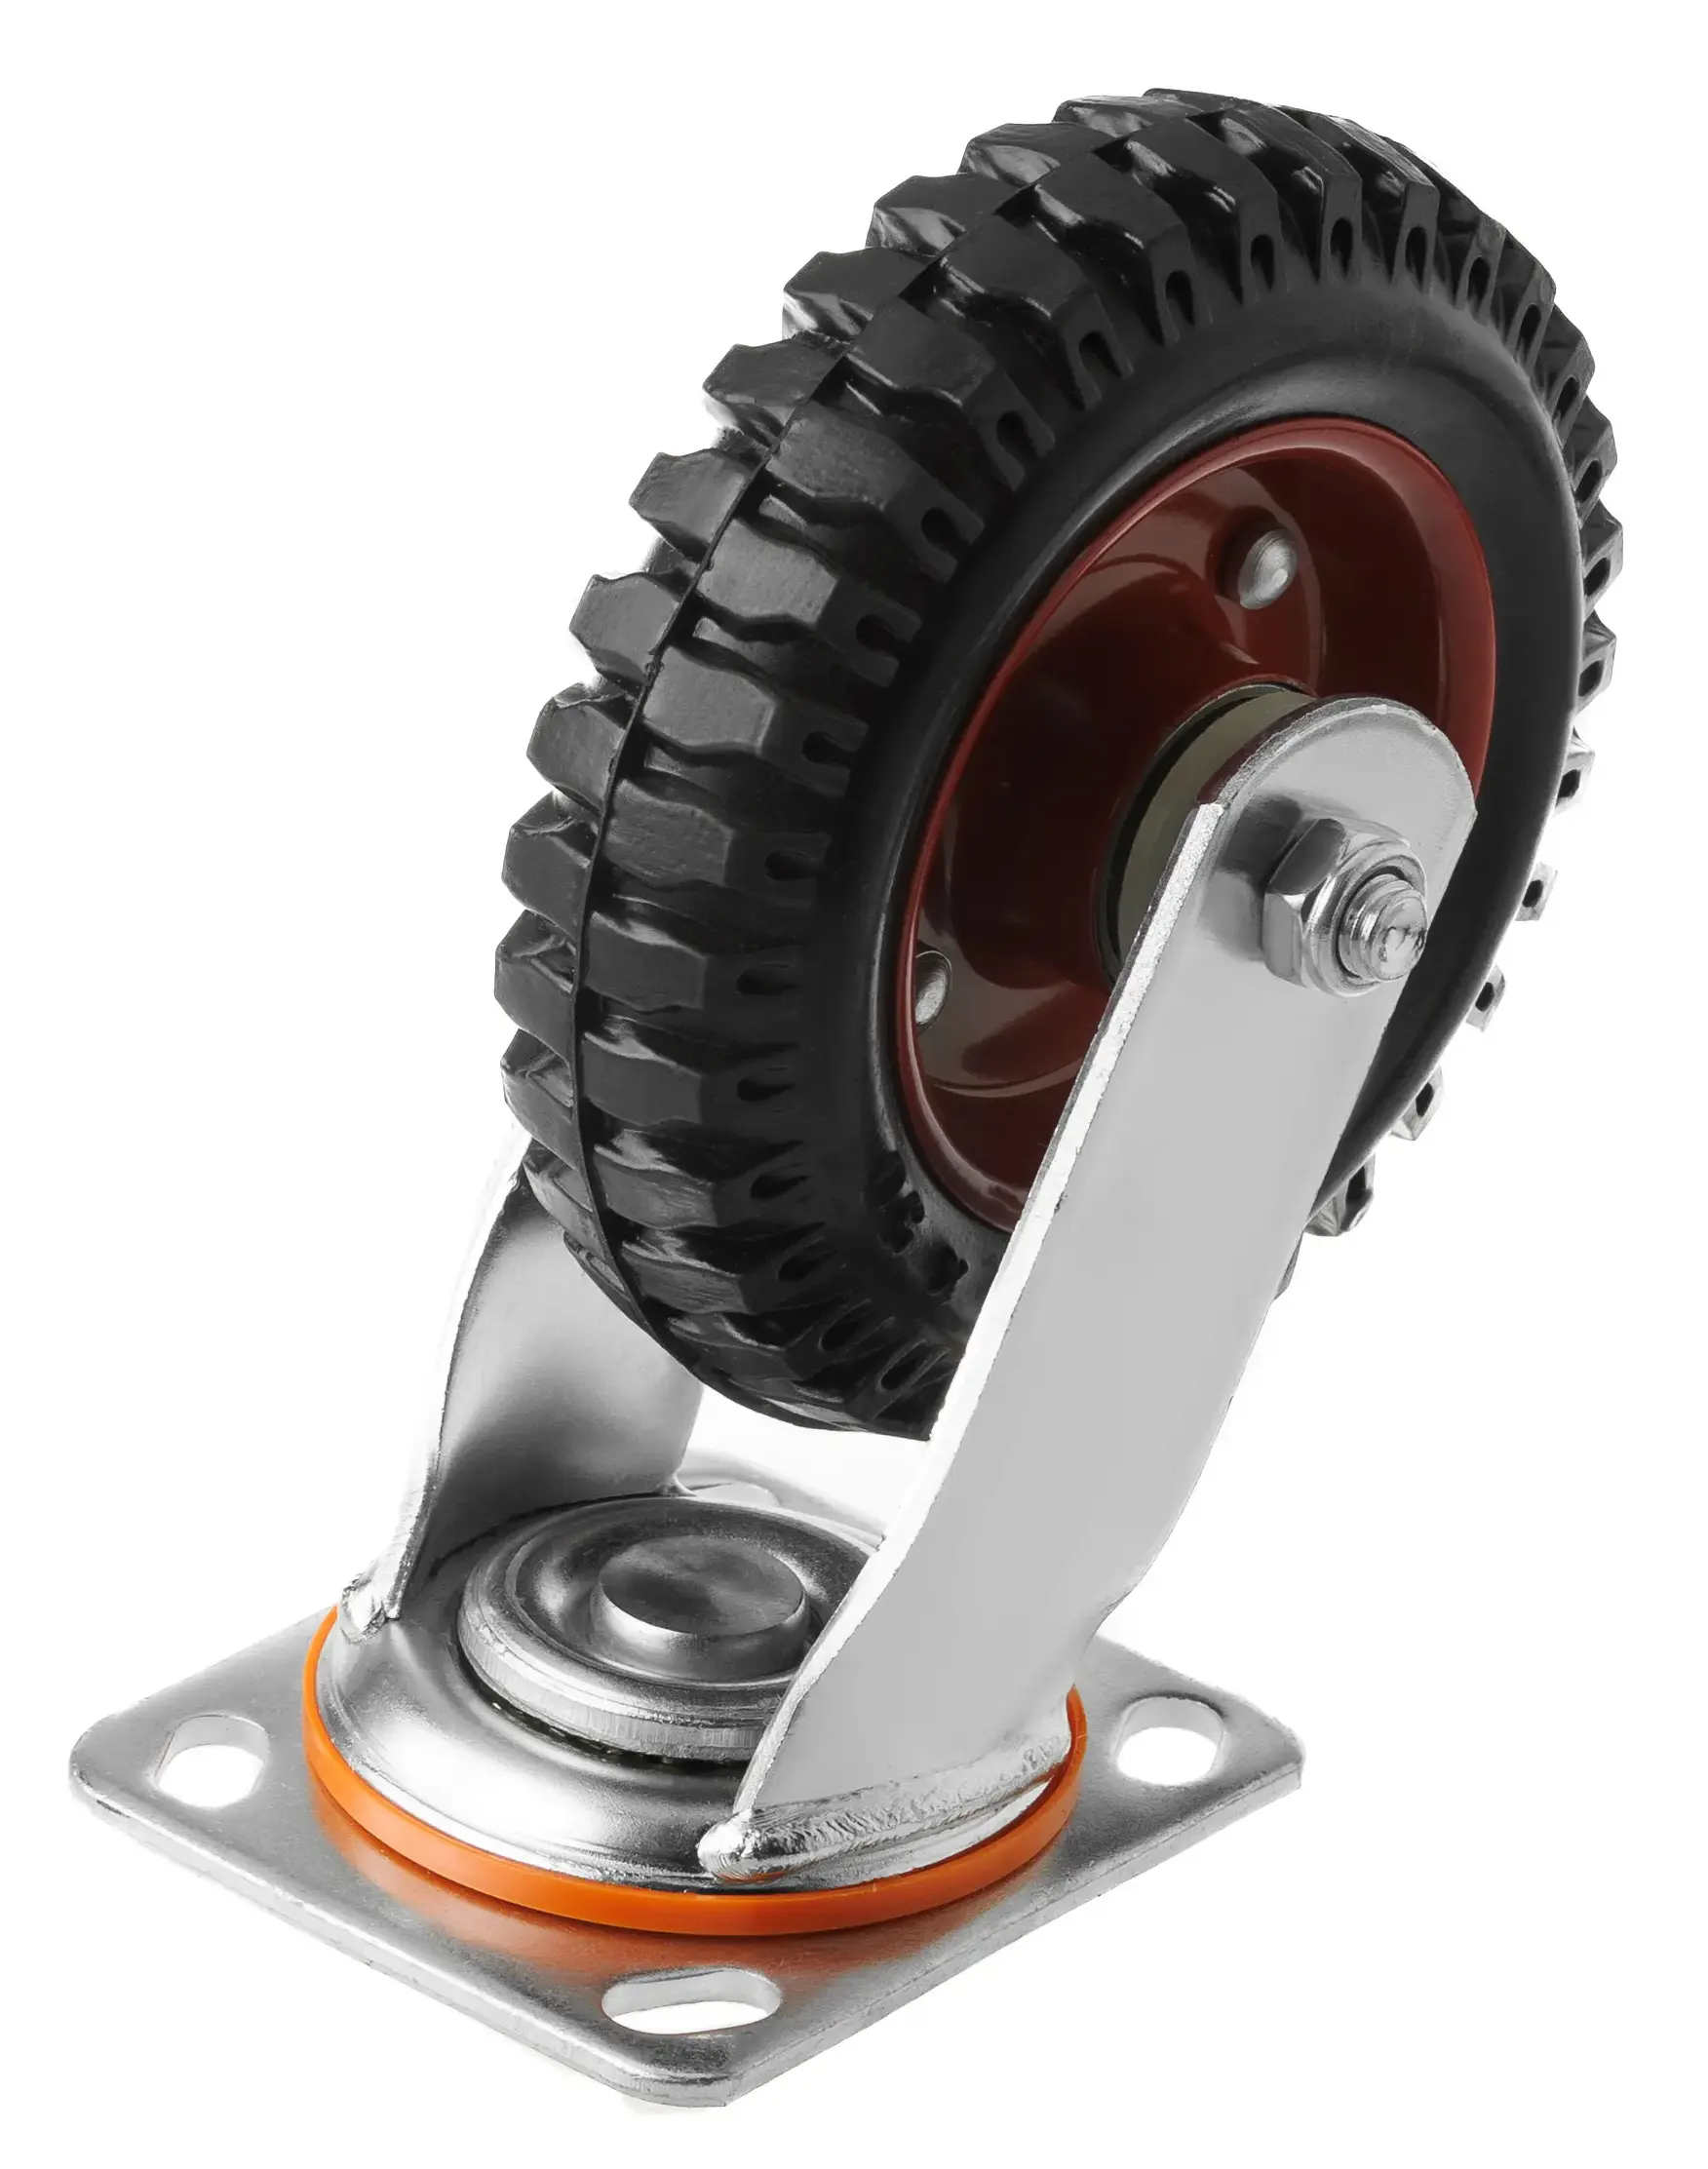 PS 160 - Литое колесо с протект. резиной 160 мм (шарикоподш., поворот. площадка, мет. обод)